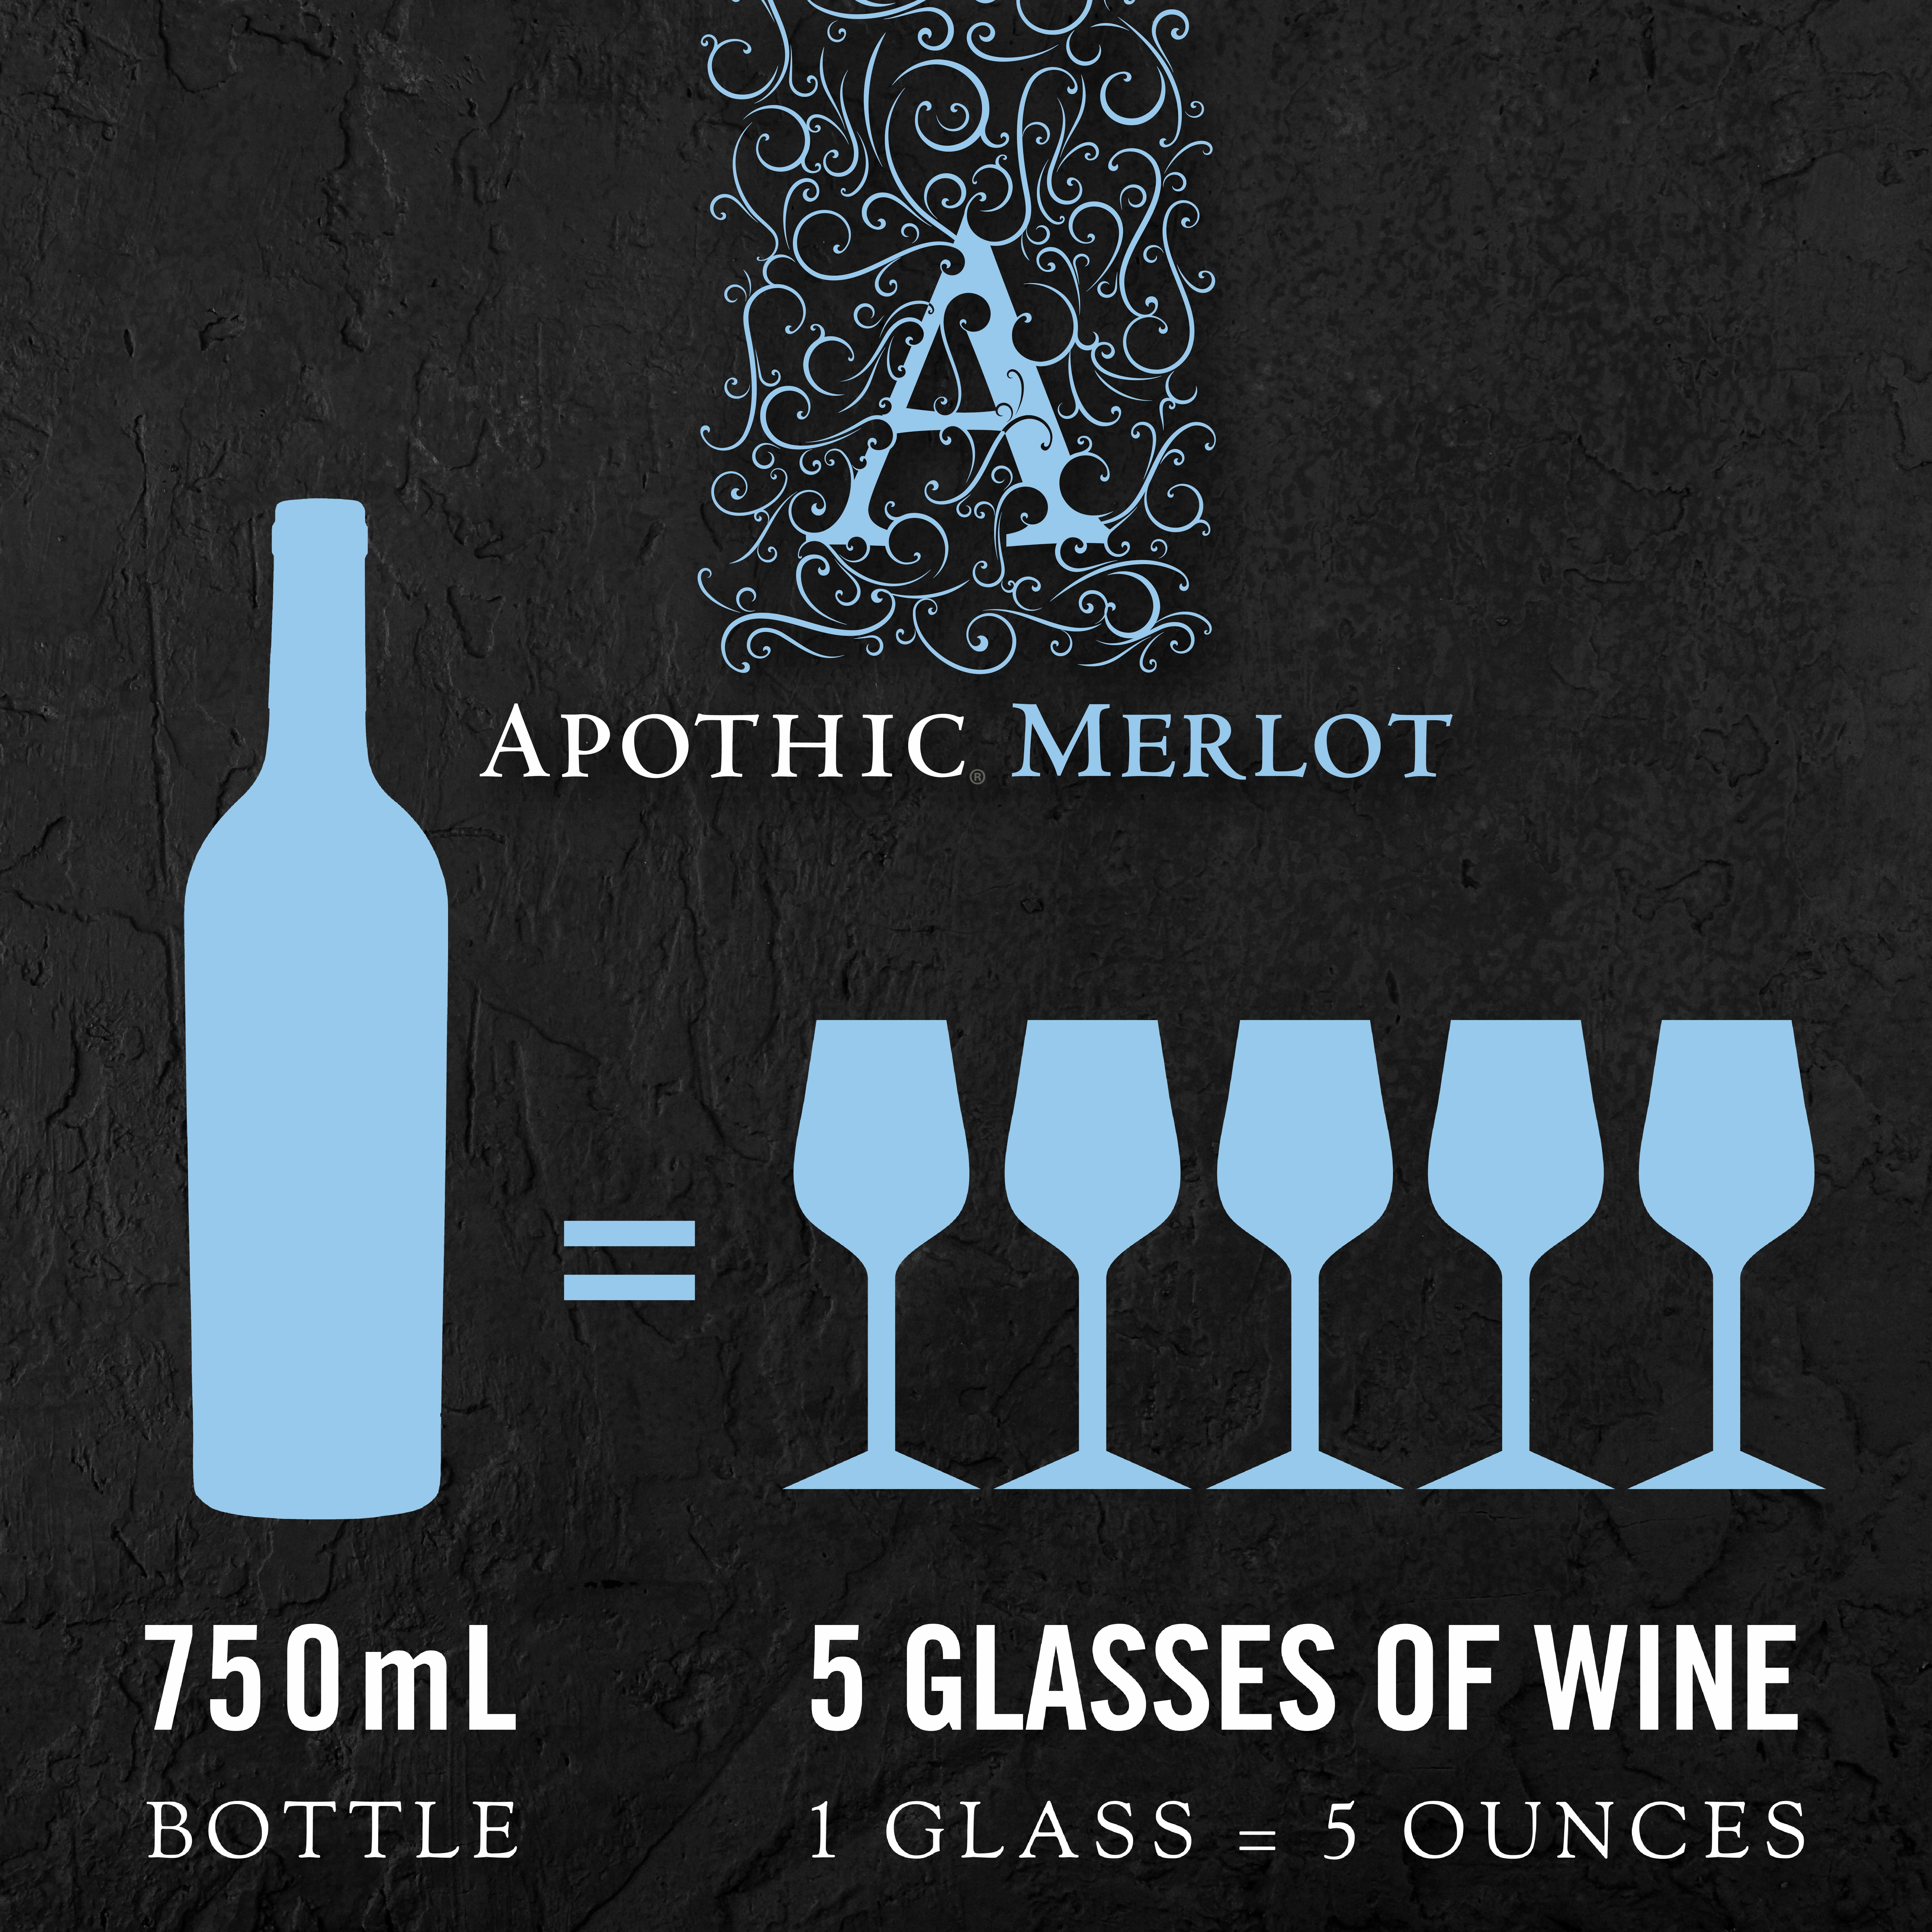 Apothic Merlot current vintage 750 ml.